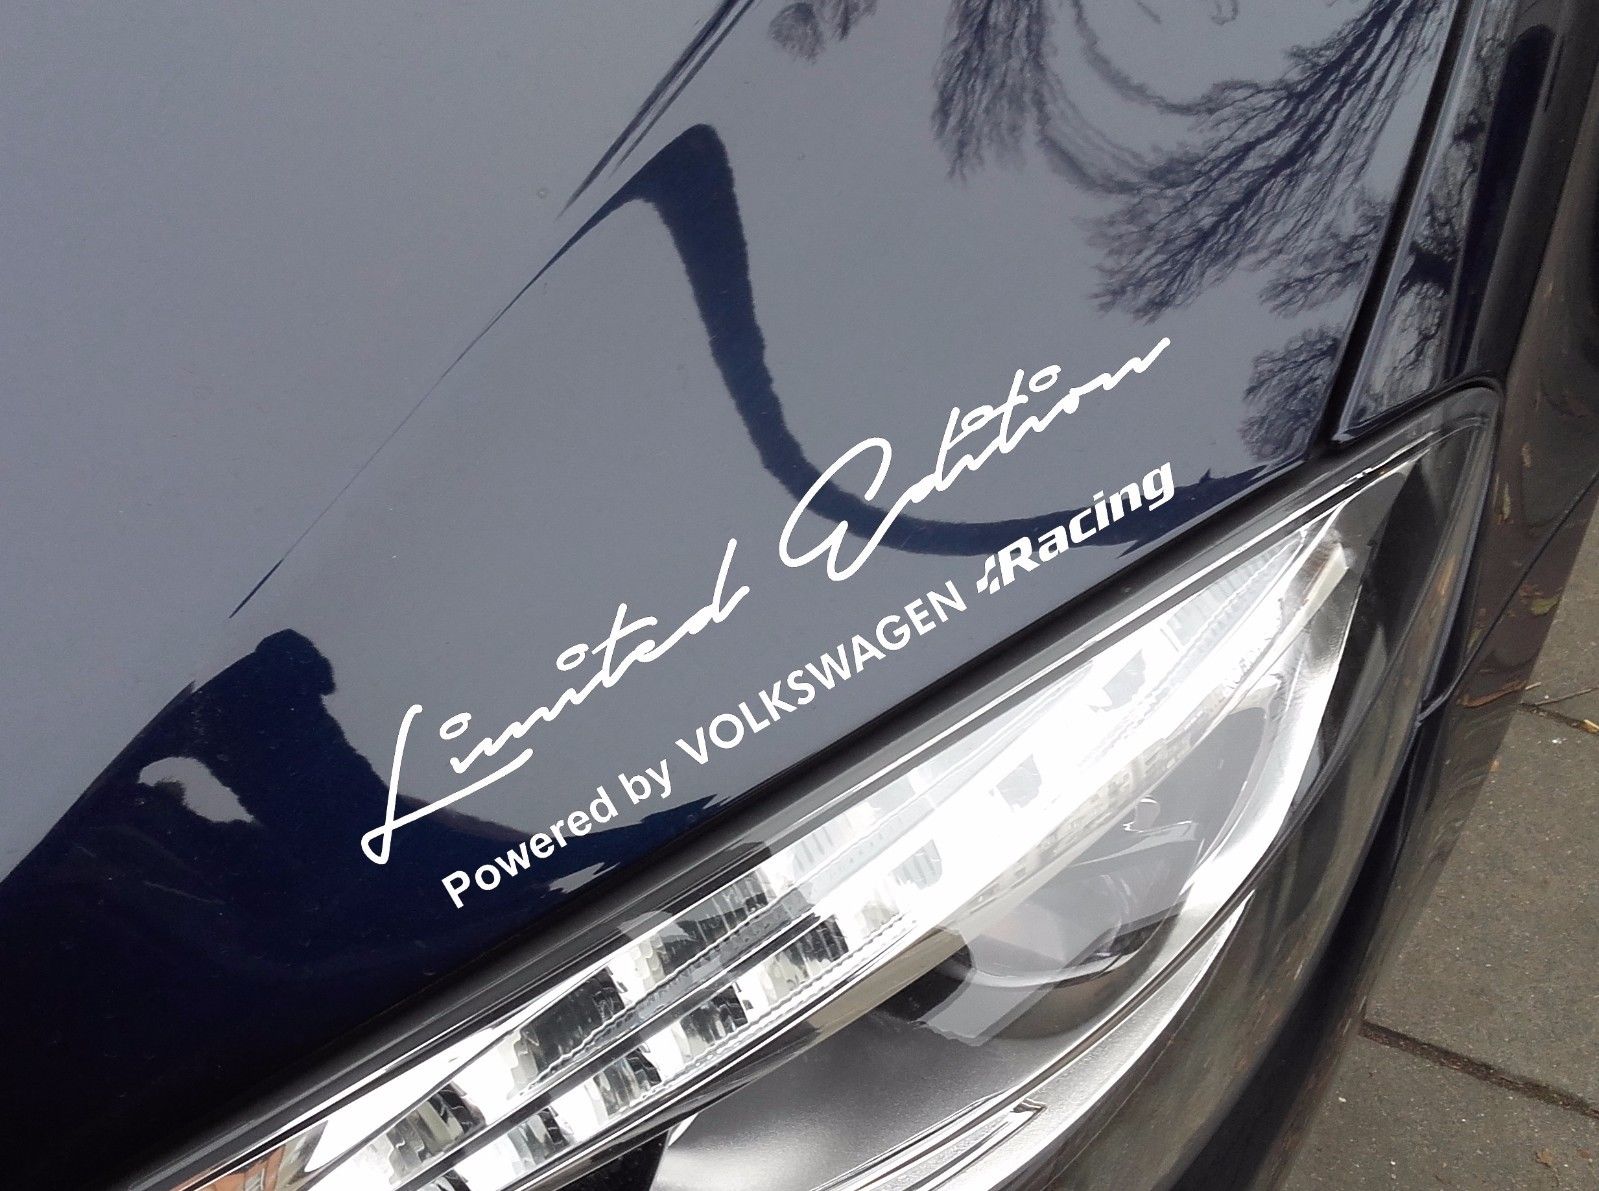 2x Limited edition VW Racing Decal Sticker fits Volkswagen Golf Beetle Passat